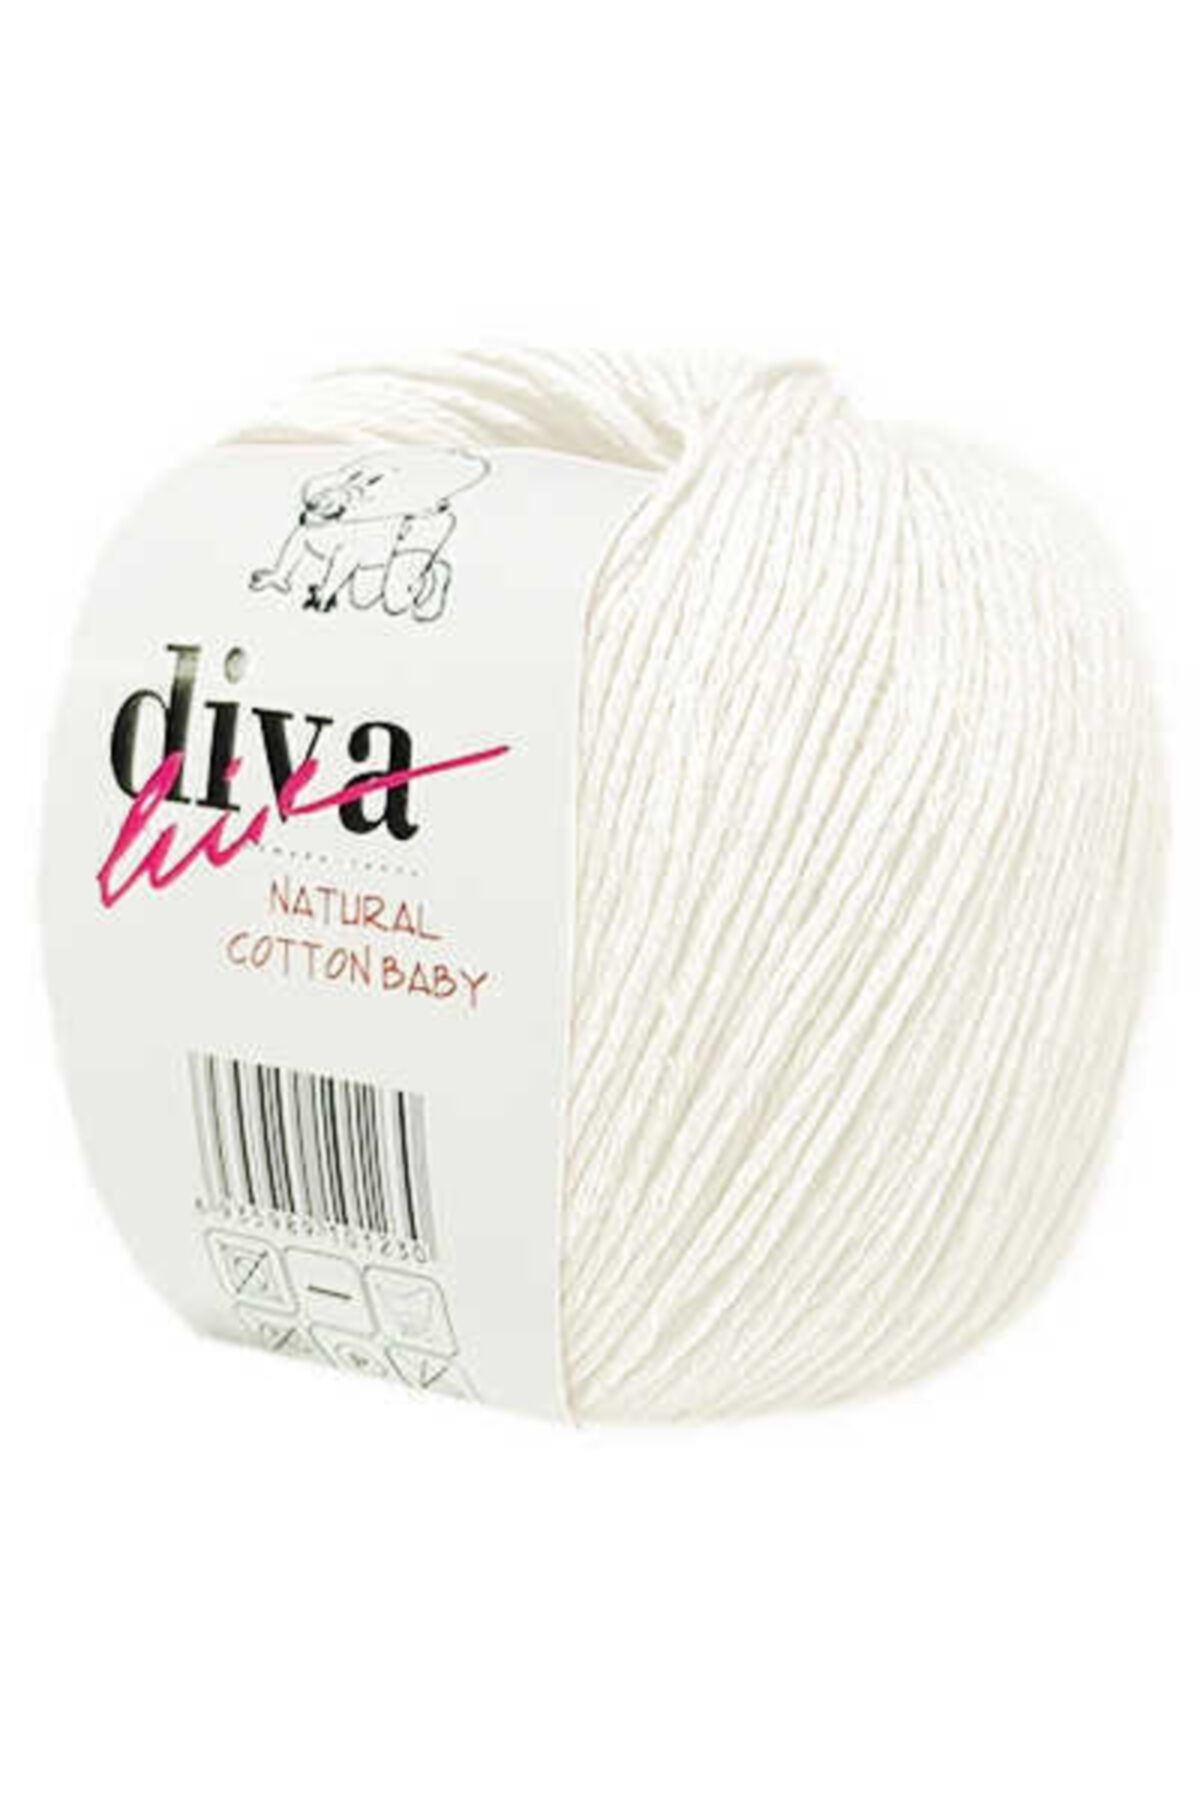 Diva İplik Diva Line Diva Natural Cotton Baby Bebe Ipi 288 Kemik